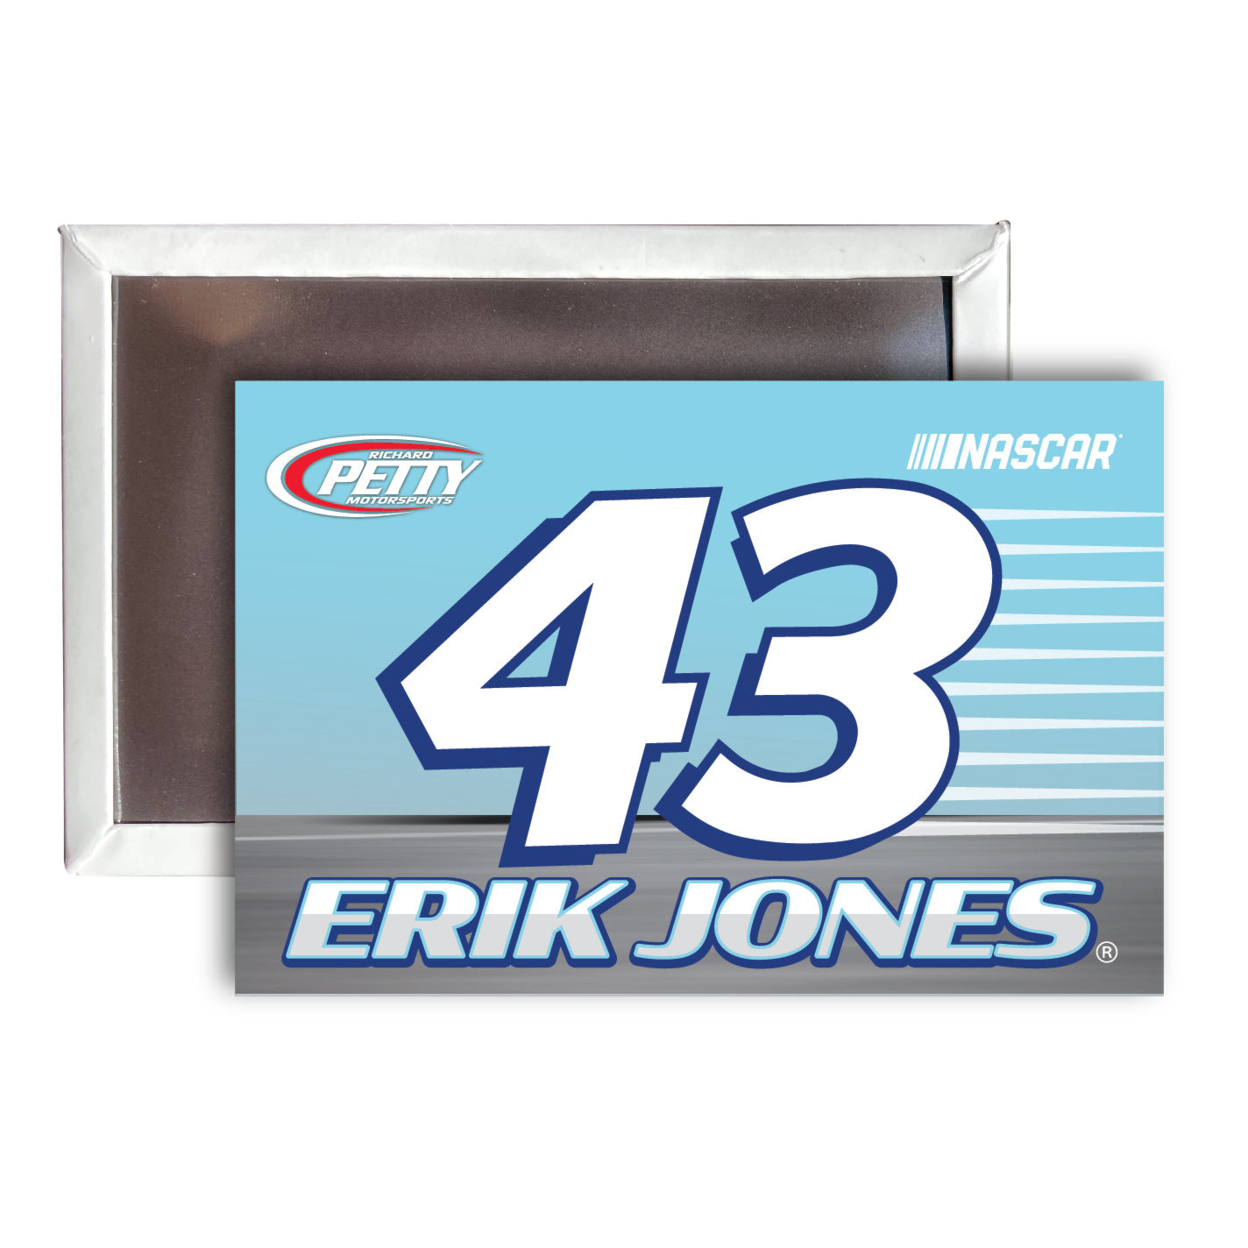 Erik Jones NASCAR #43 Fridge Magnet